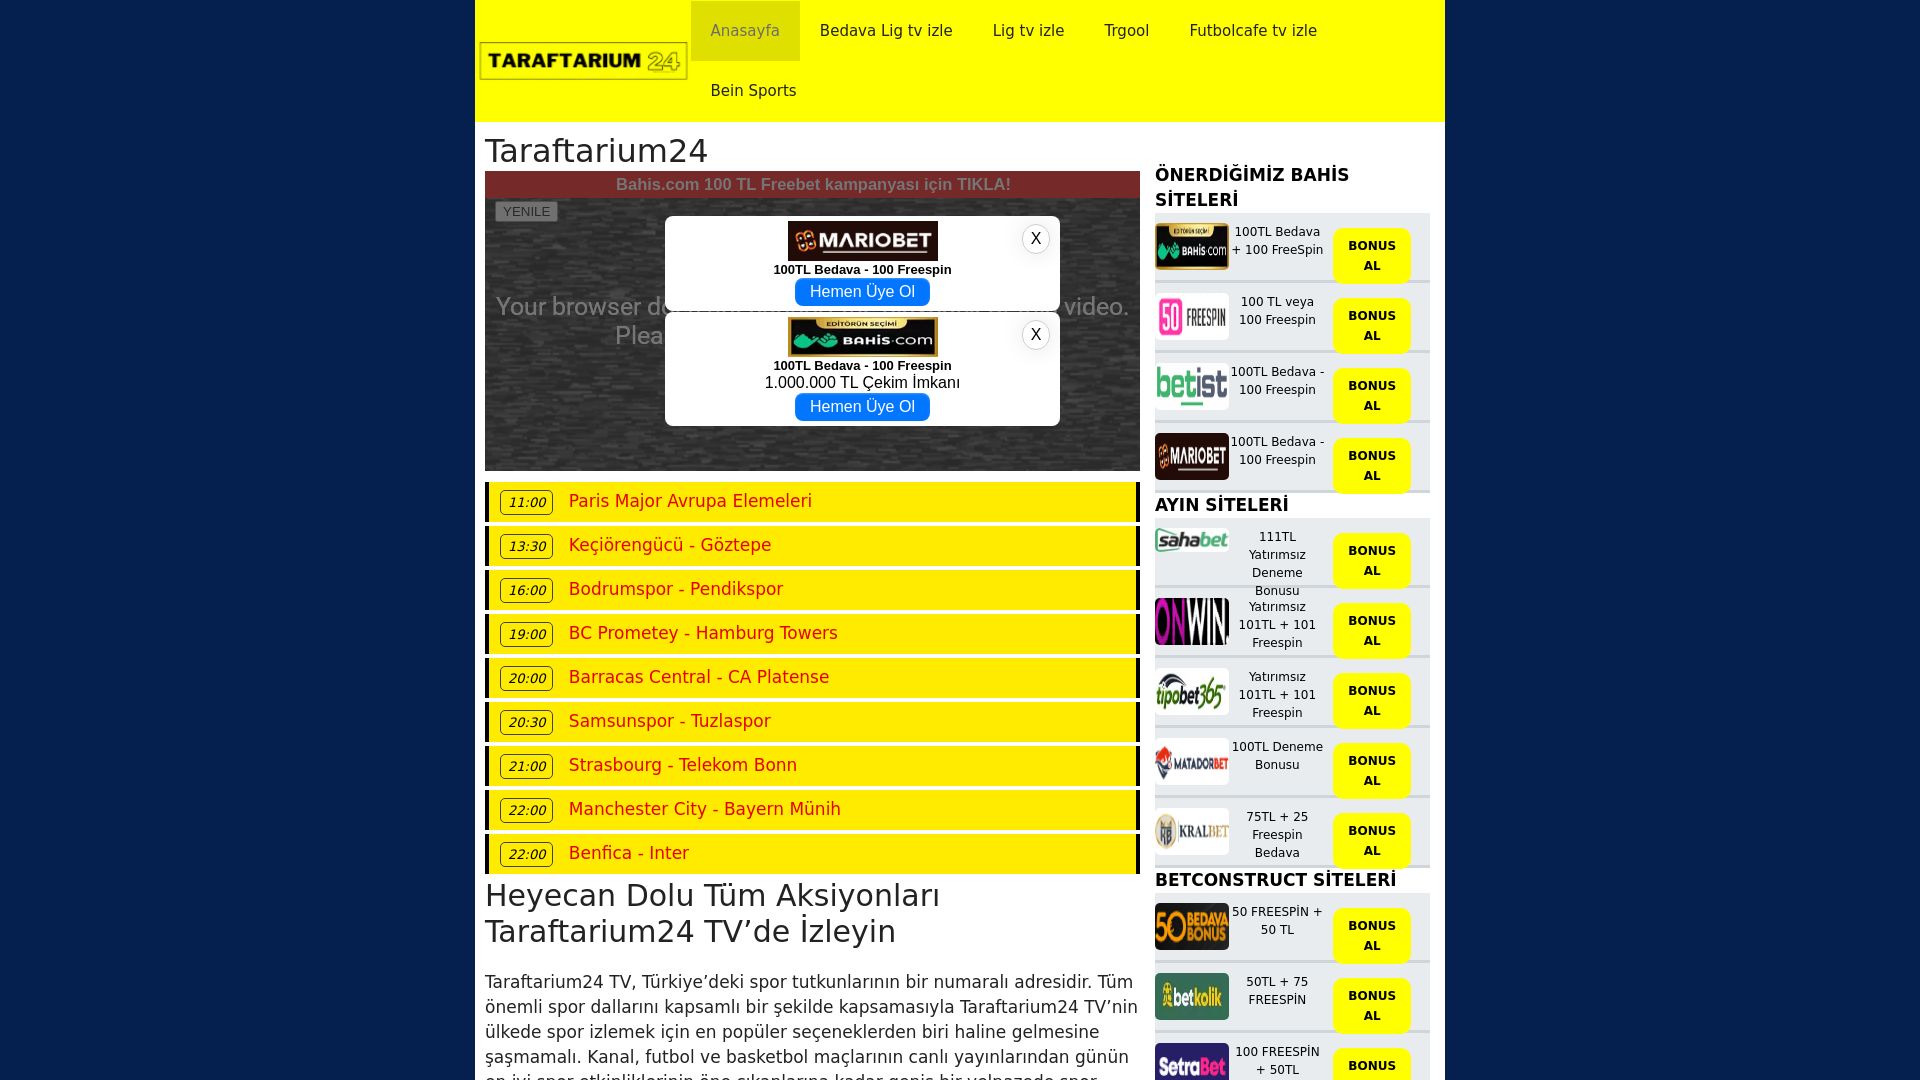 Website status tadalafilgenericpill.com is   ONLINE